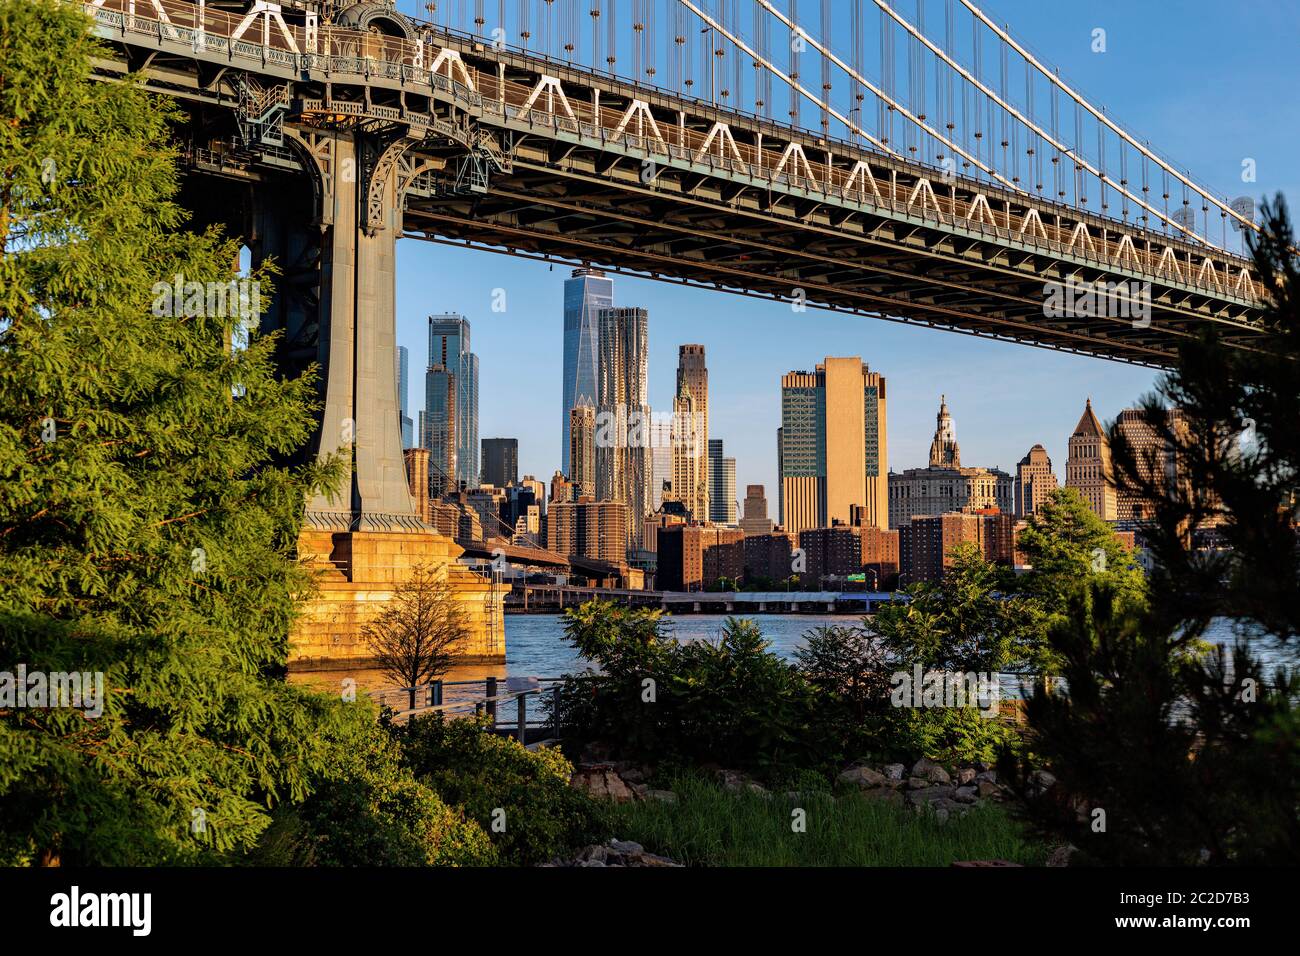 New York City / USA - JUN 25 2018: Lower Manhattan skyline at sunrise view from Brooklyn Bridge Park Stock Photo